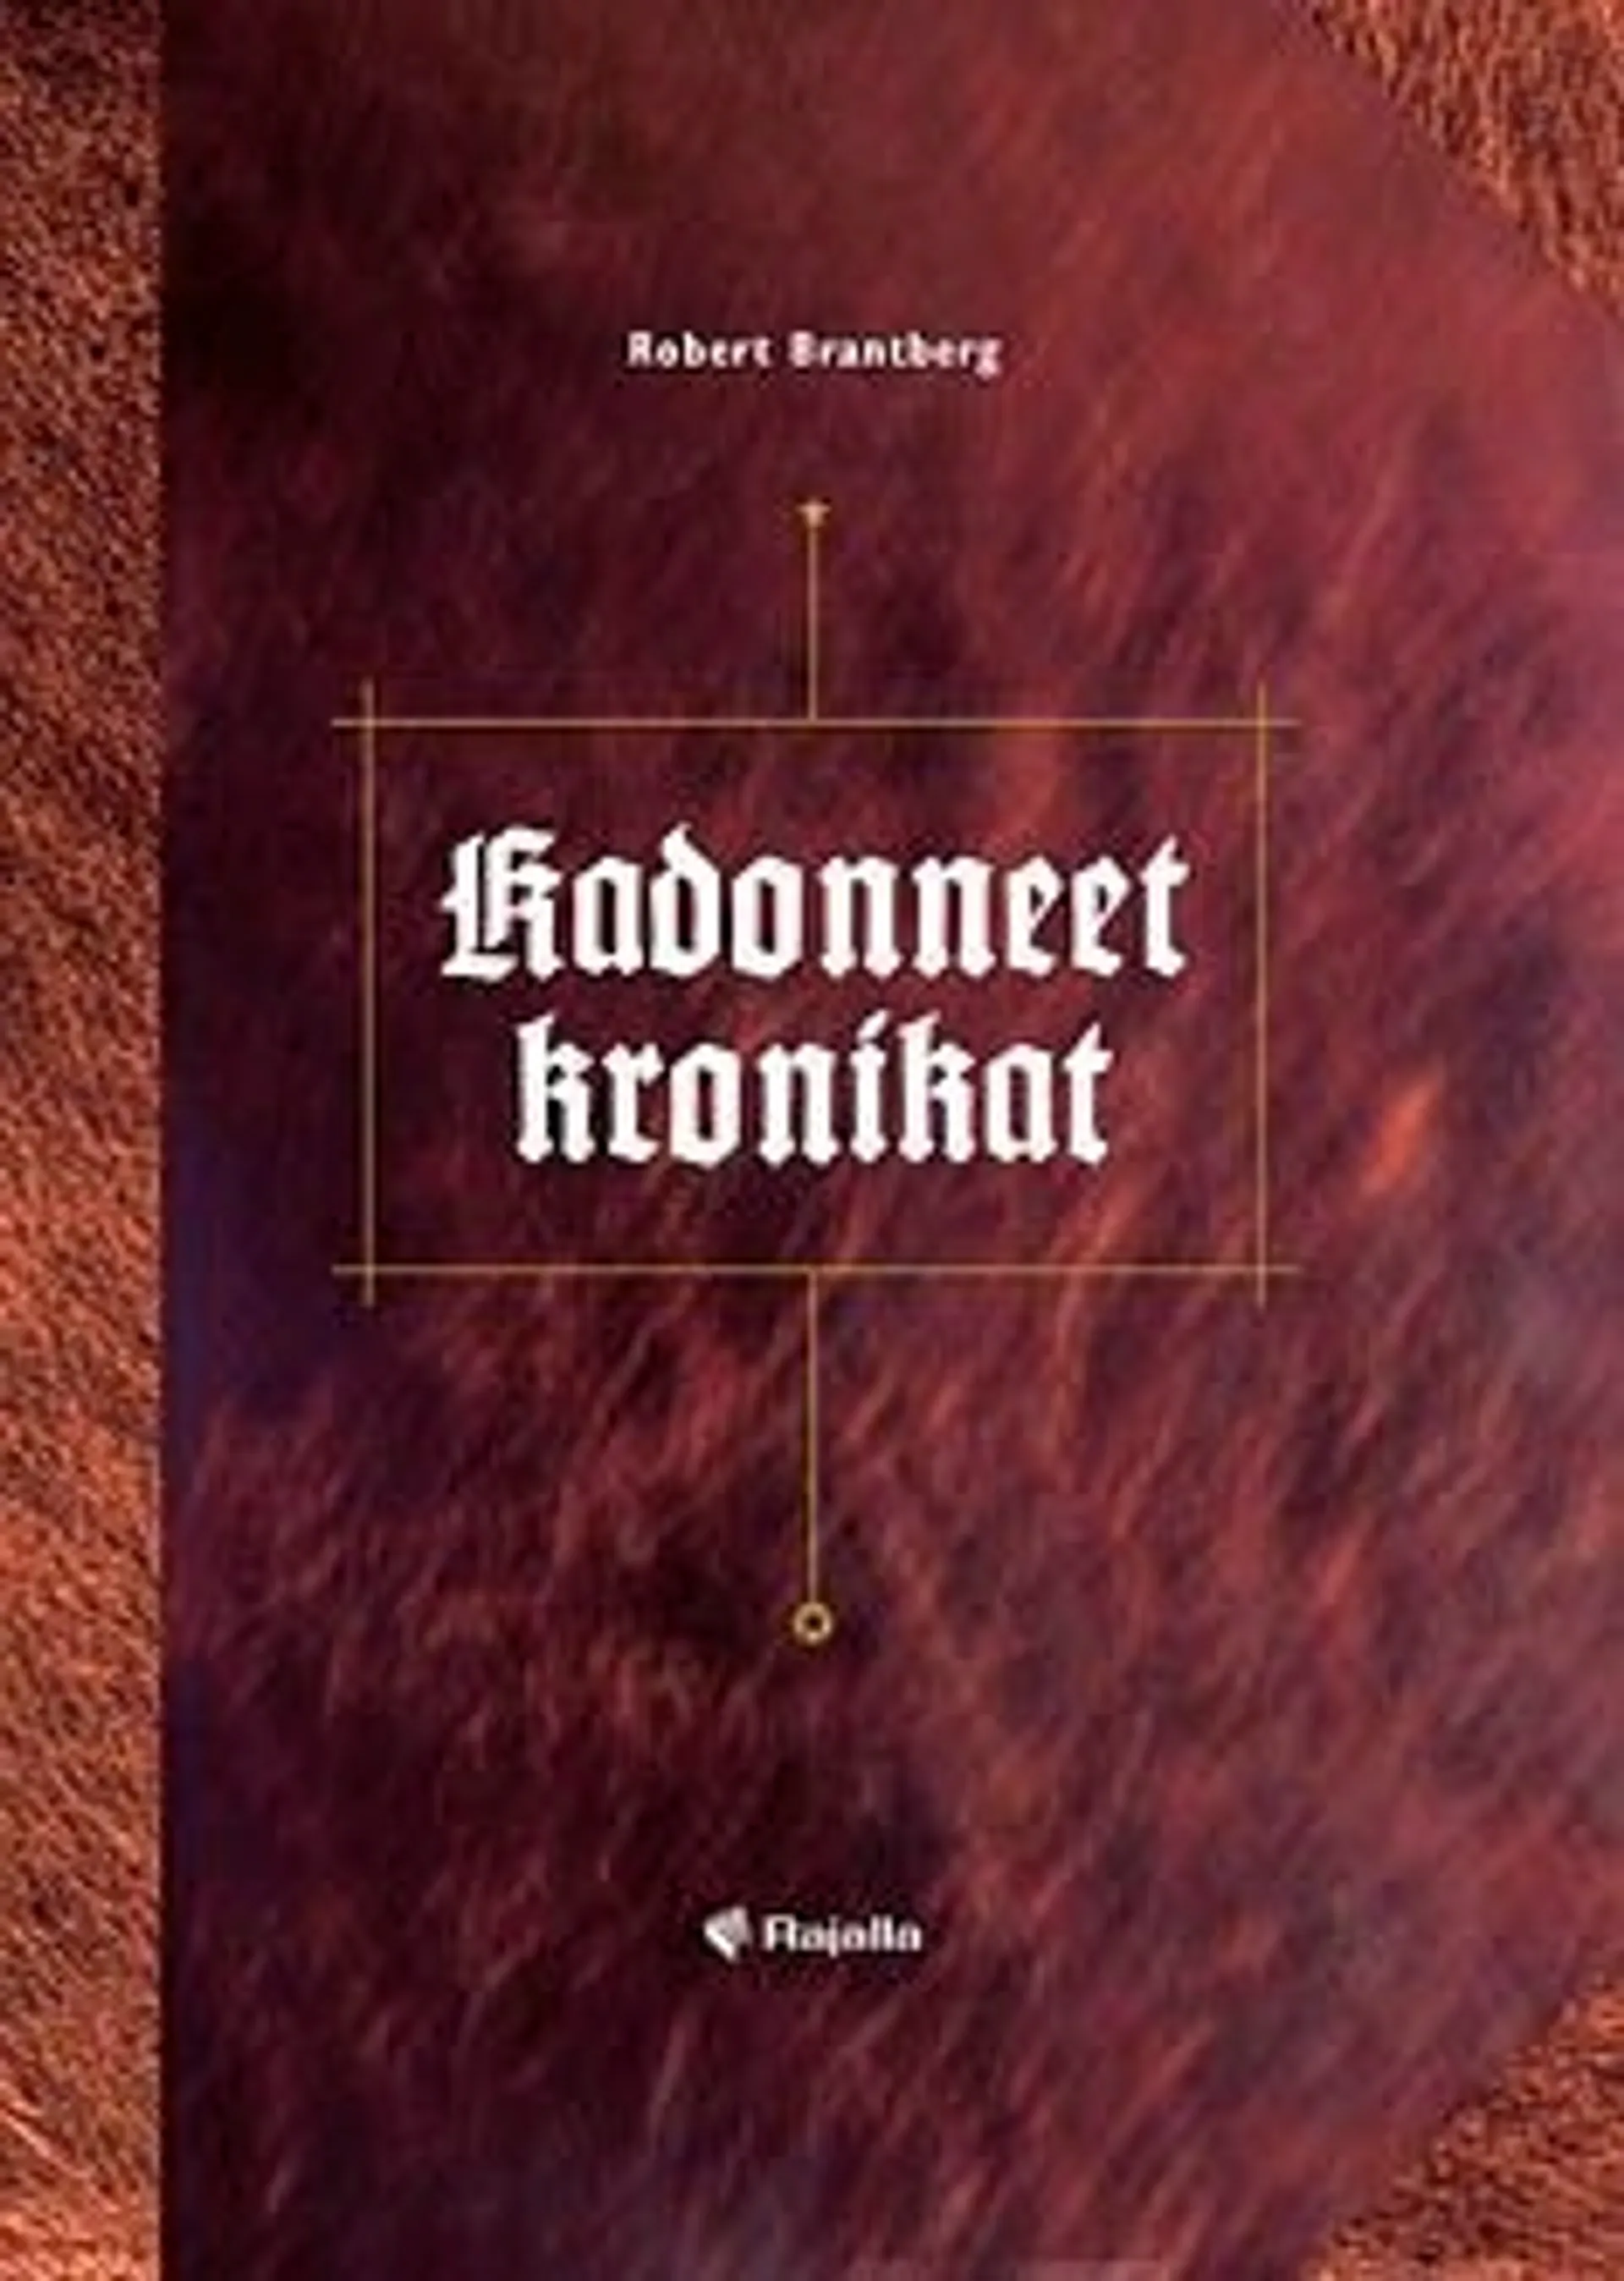 Brantberg, Kadonneet kronikat